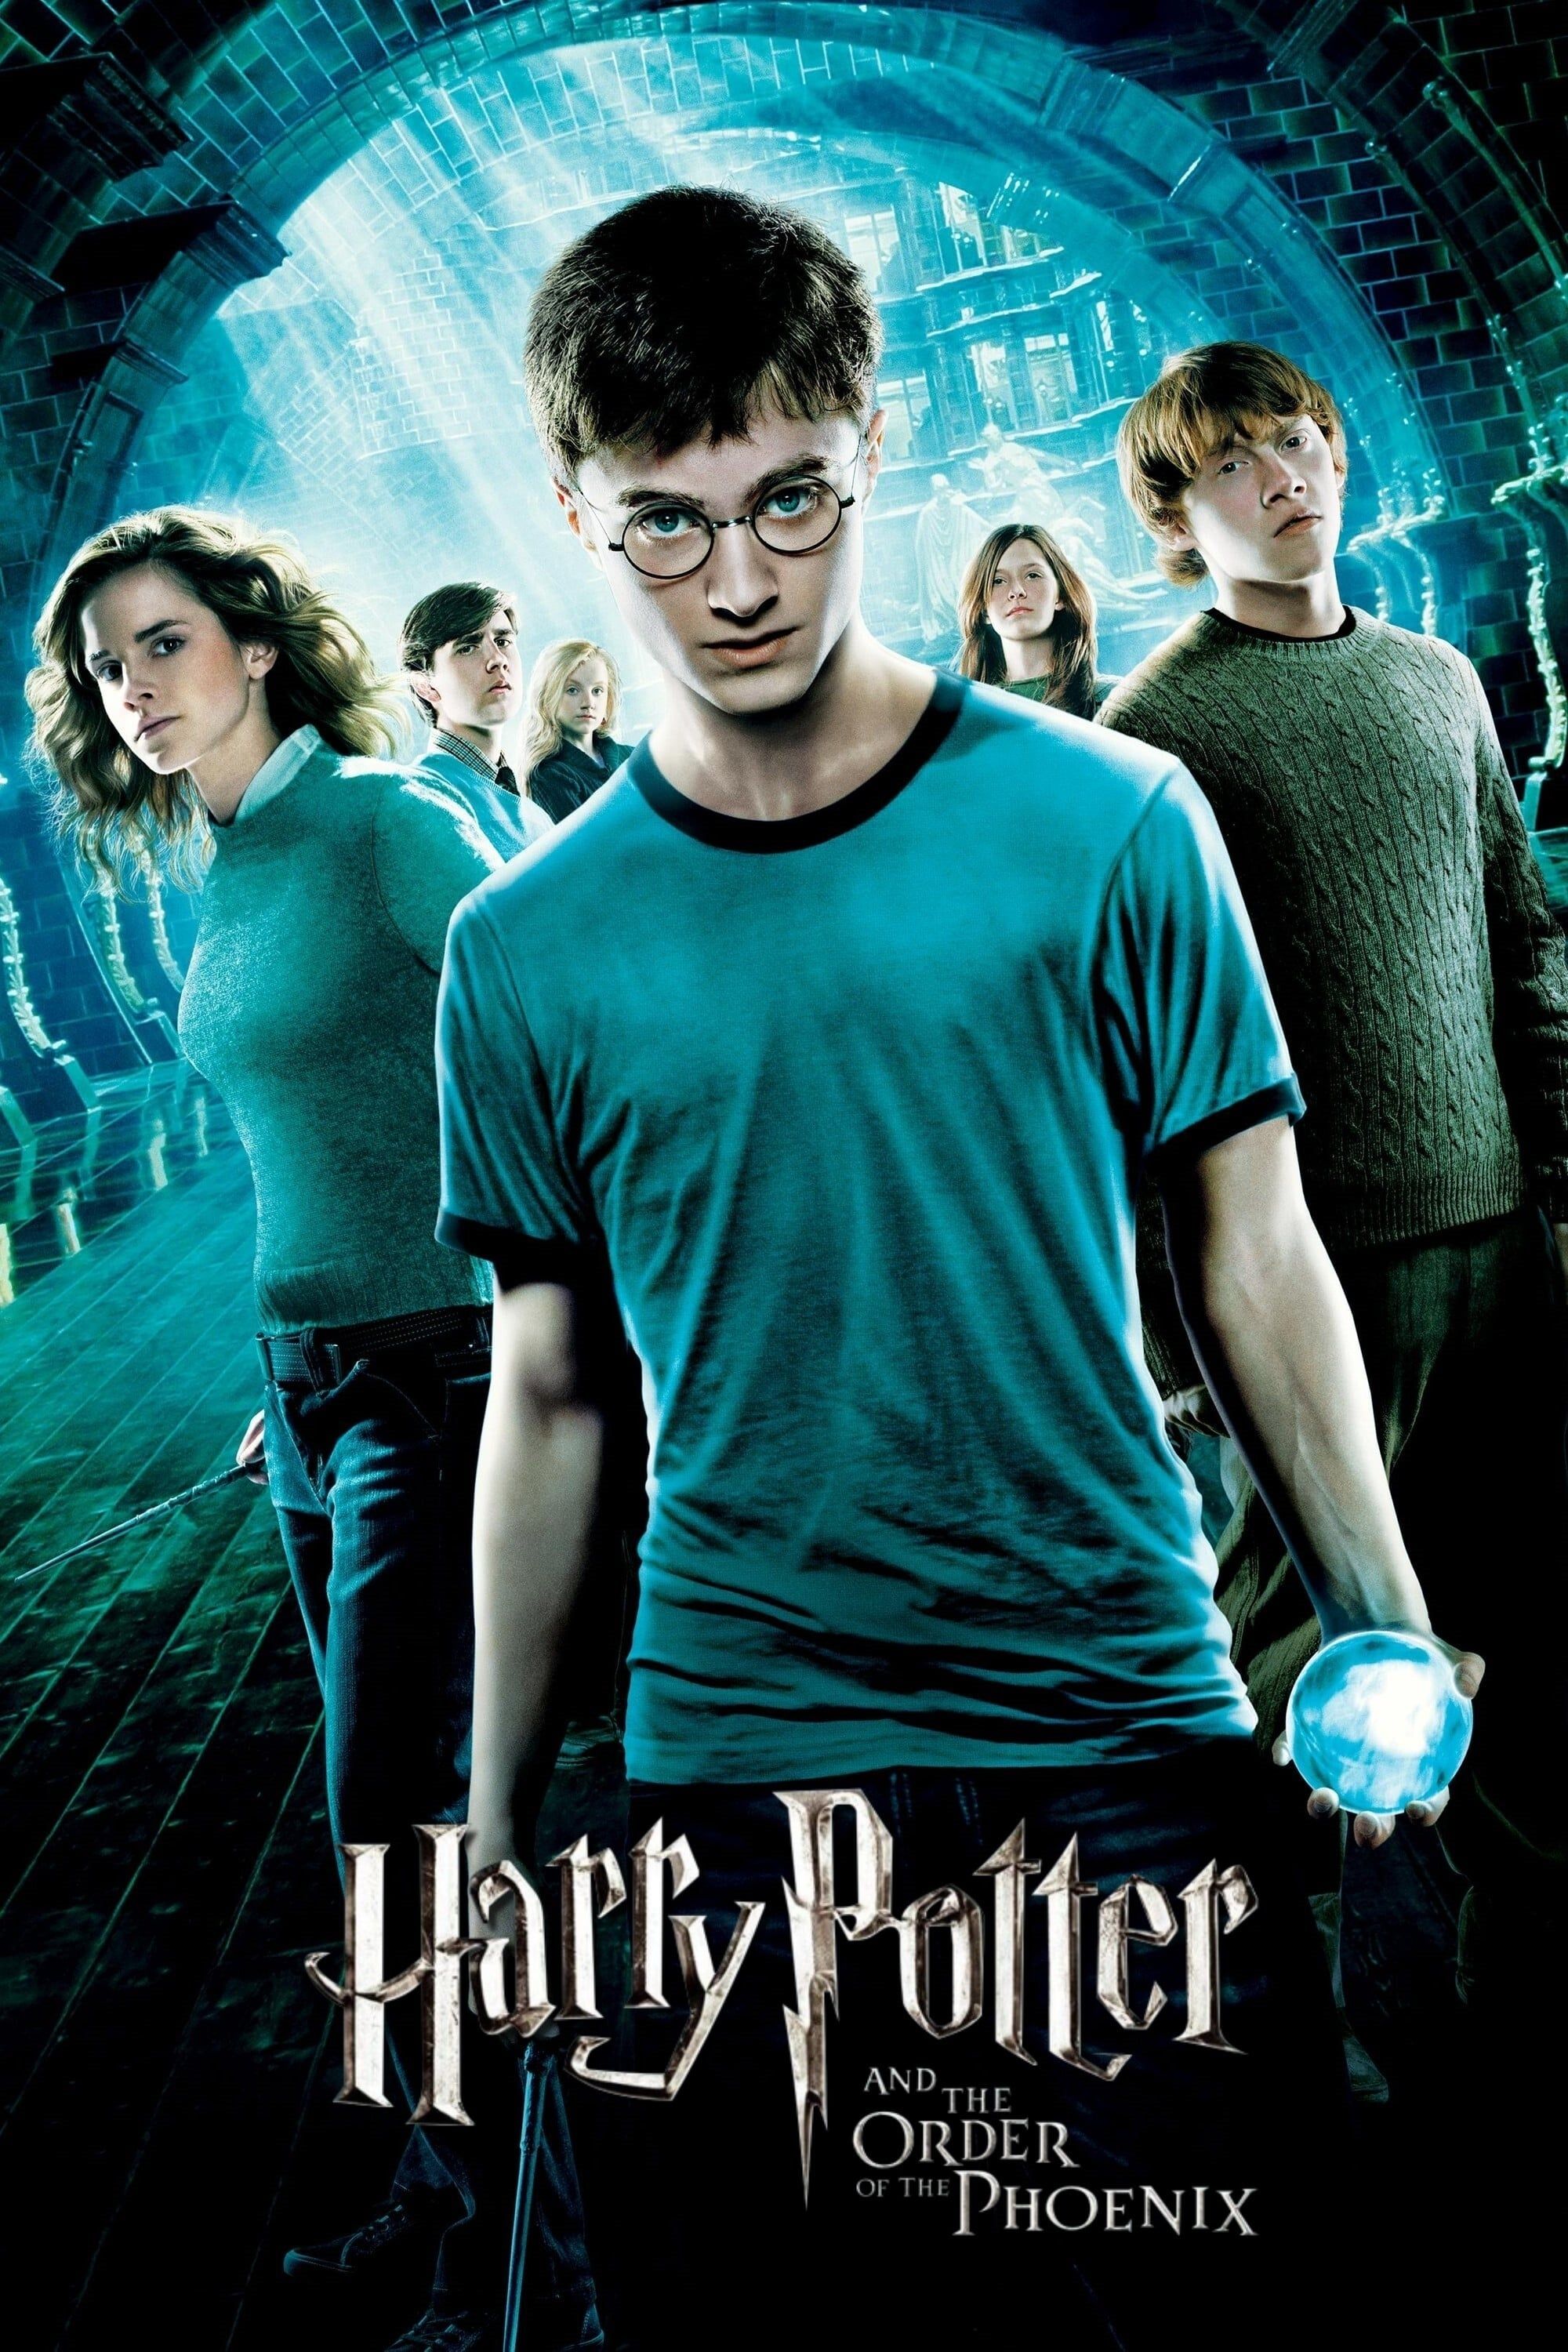 Emma Watson's Best Hermione Granger Moments in the Harry Potter Franchise